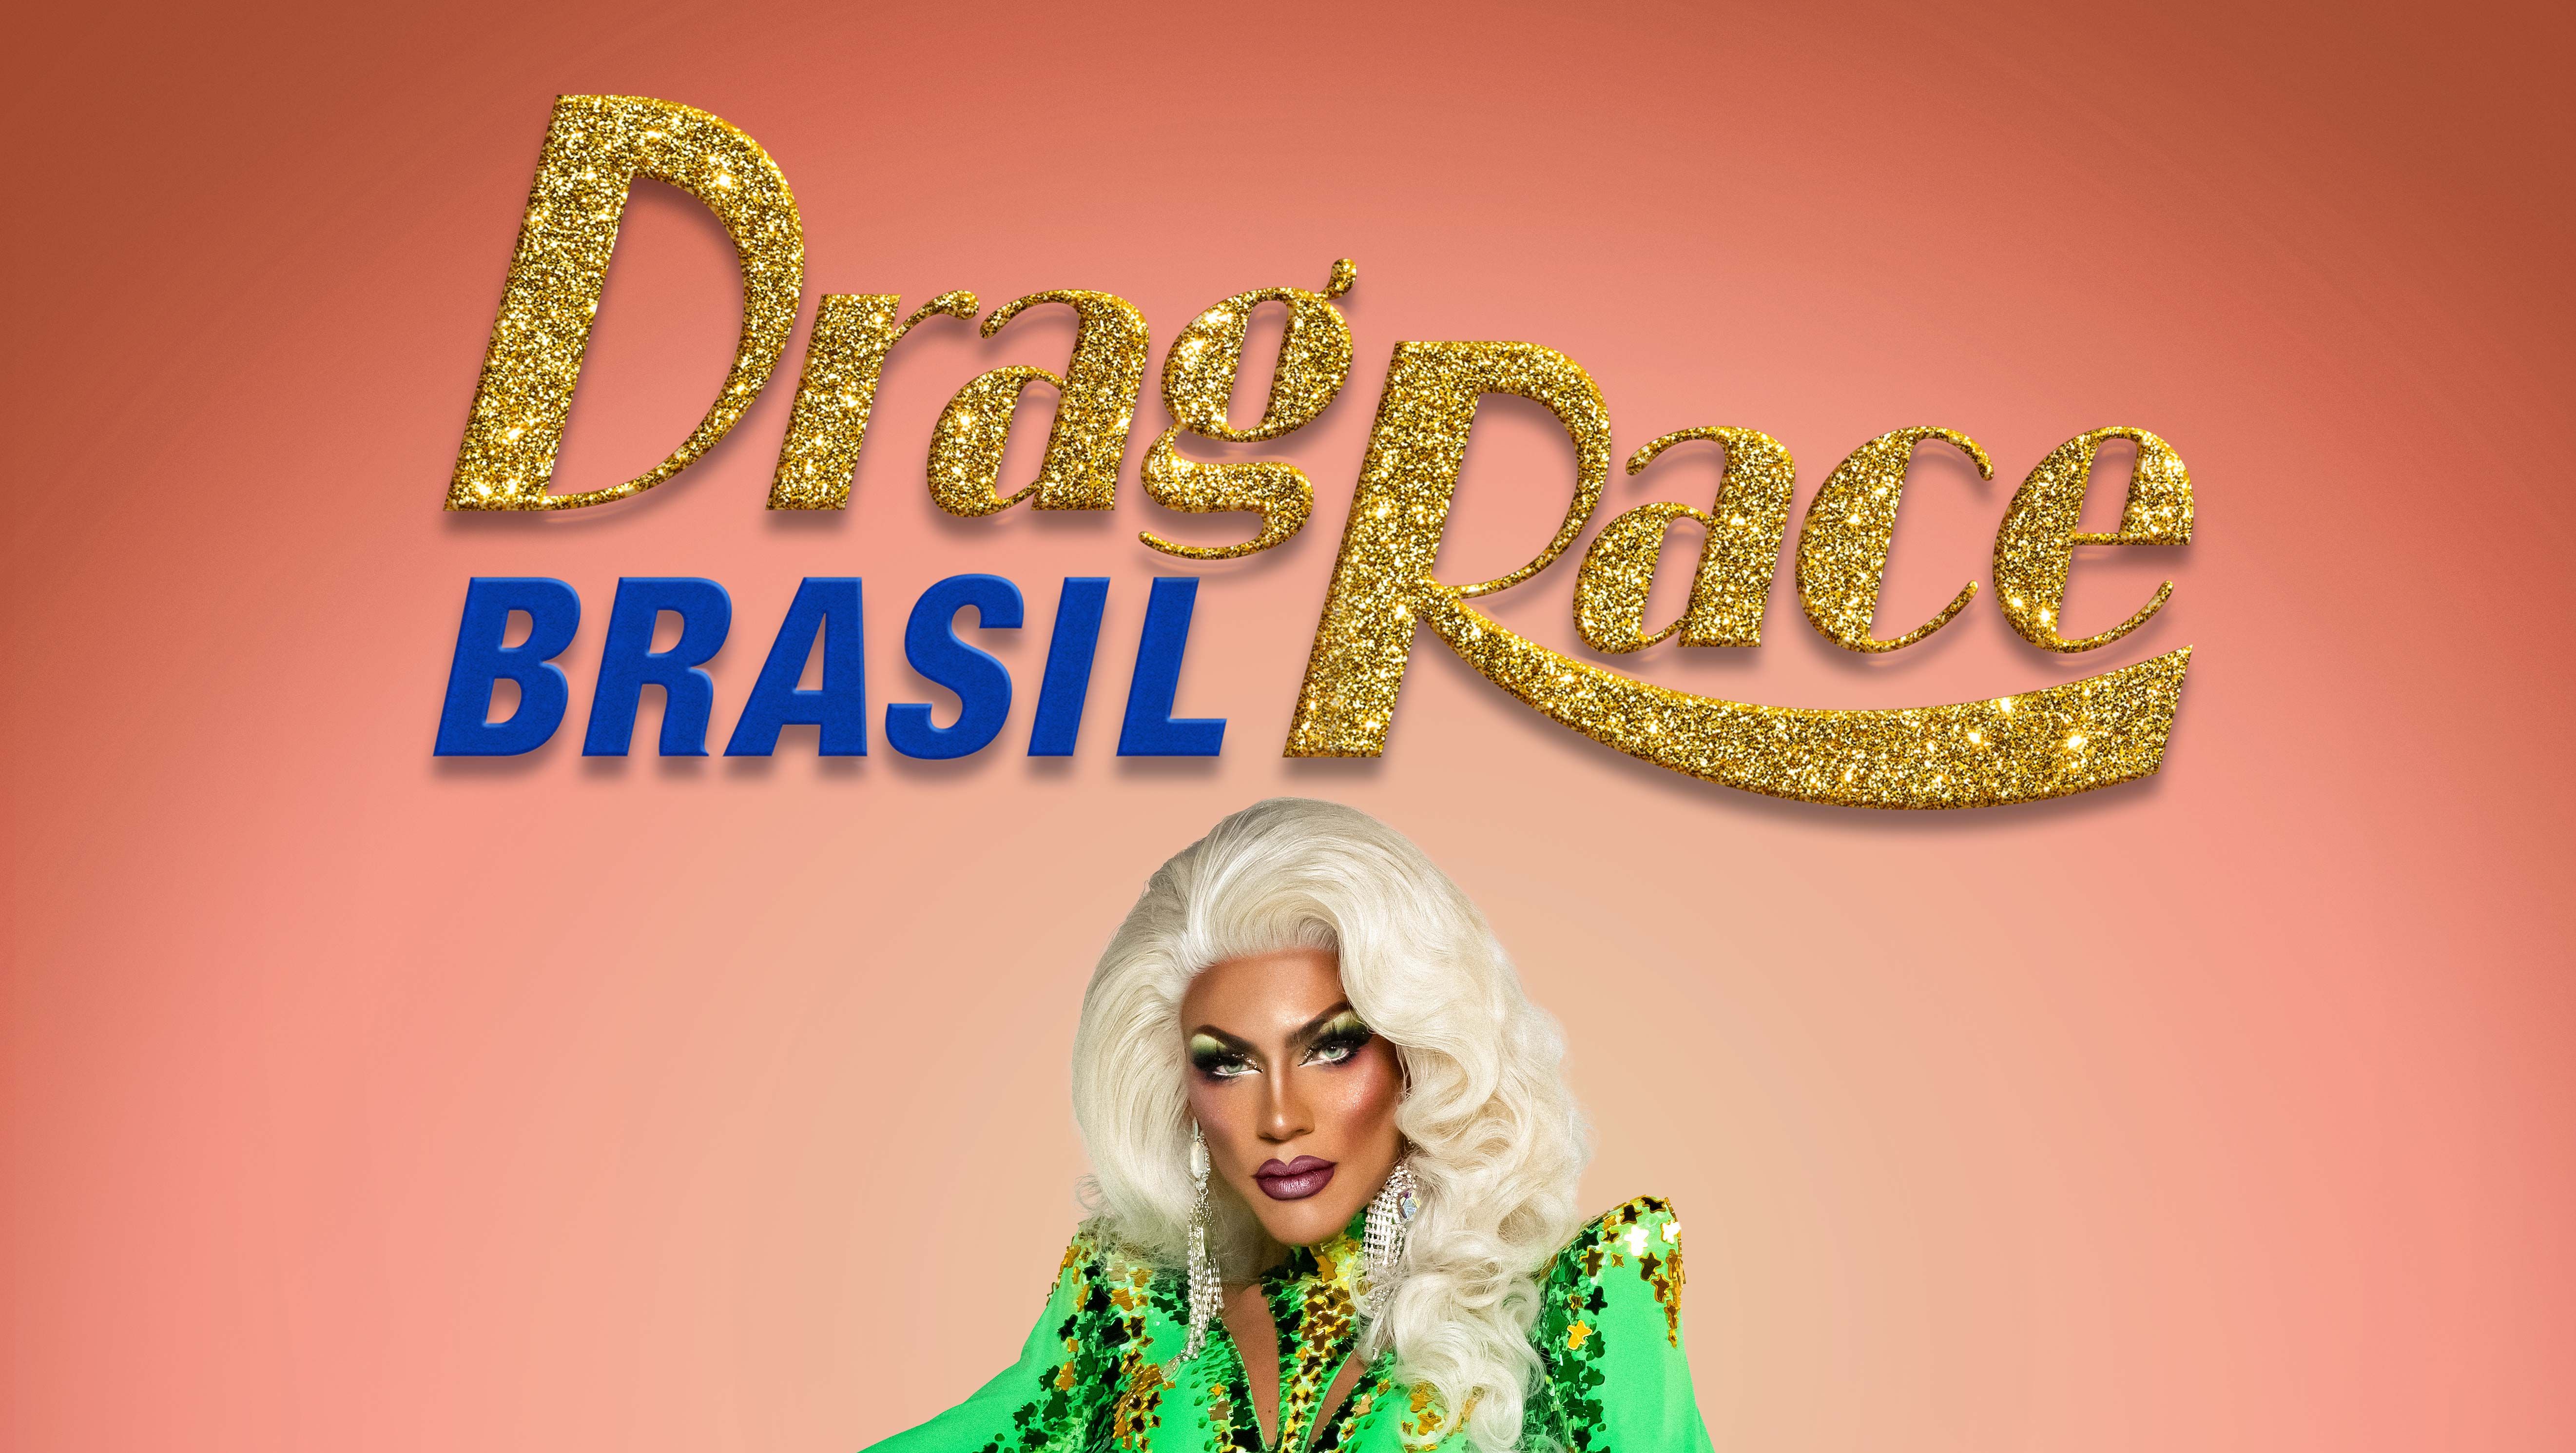 Drag Race Brasil - WOW Presents Plus